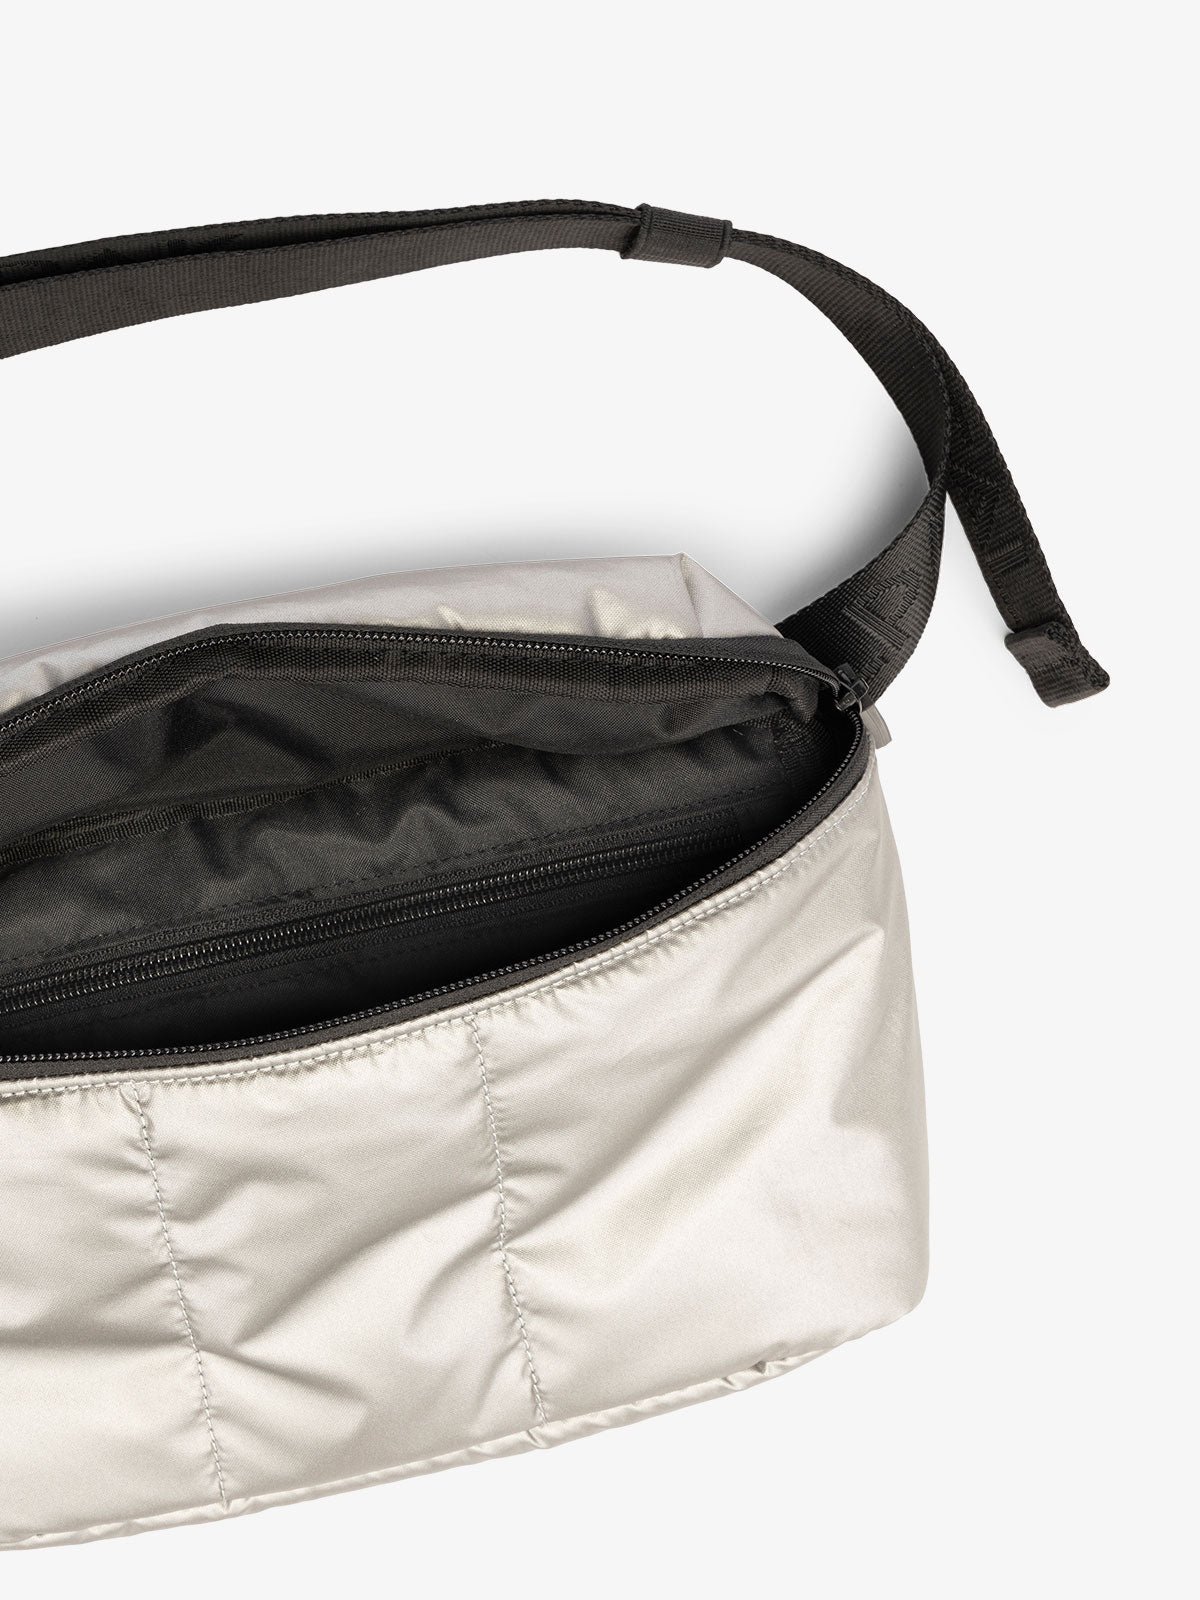 CALPAK Luka Belt Bag close up interior and strap in silver gunmetal